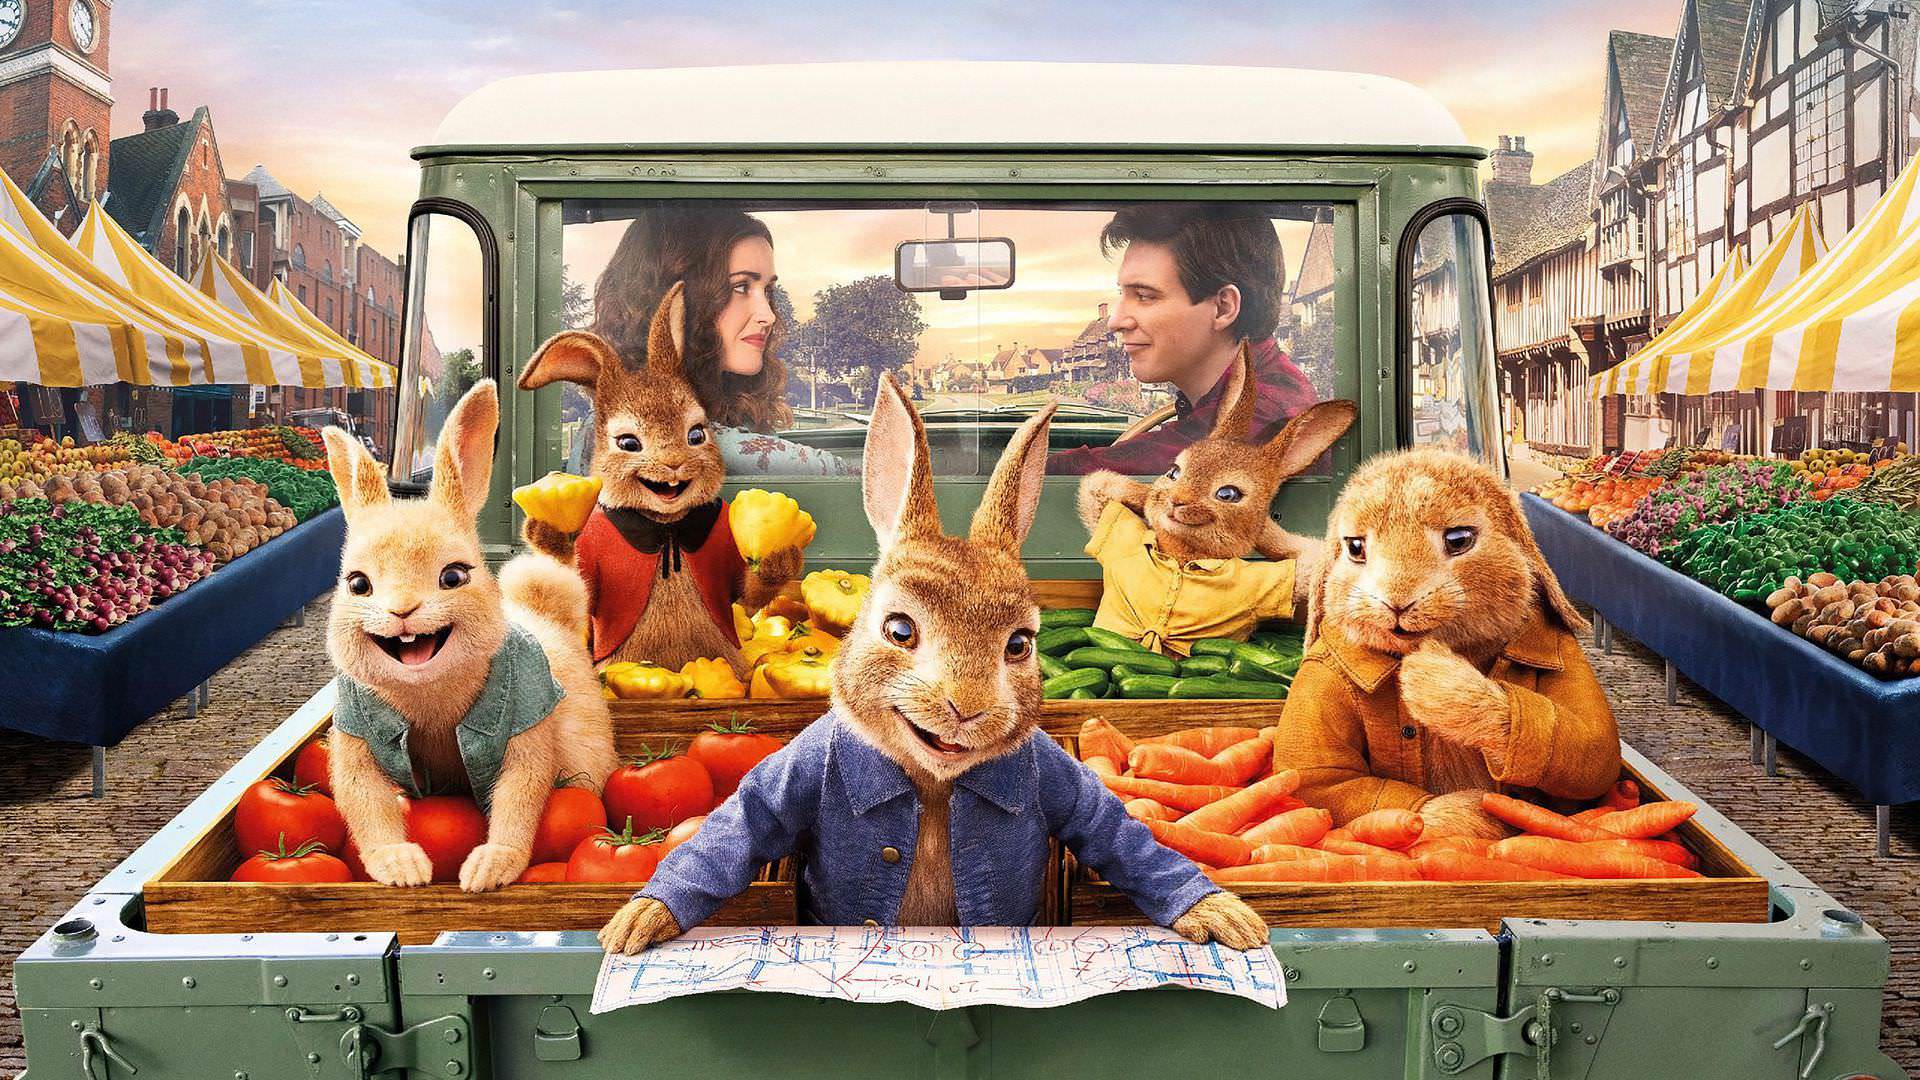 نقد فیلم Peter Rabbit 2: The Runaway | دنباله غیر ضروری سونی